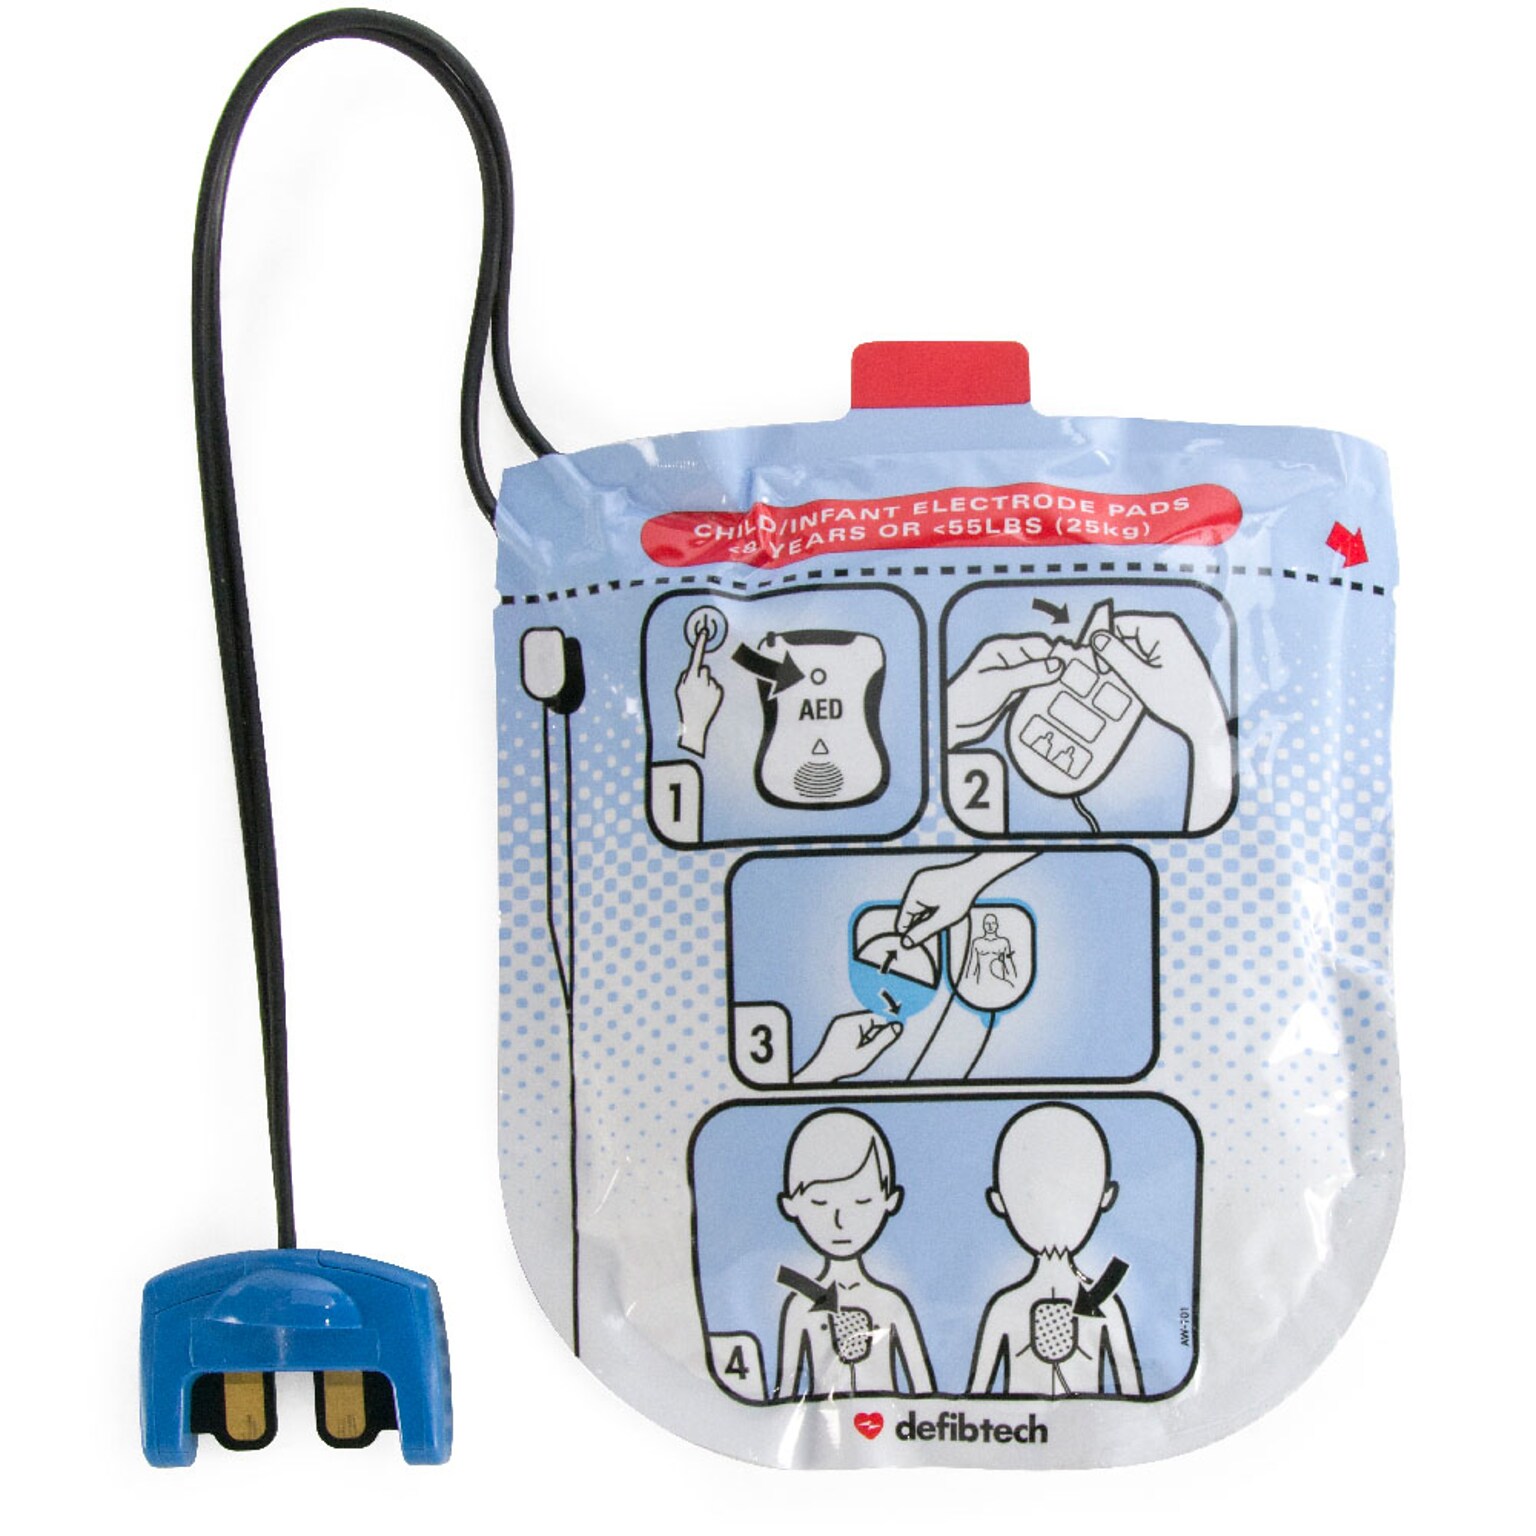 Defibtech Defibrillator Pads for Lifeline VIEW, Pediatric, 1 Pair (0710-0106)